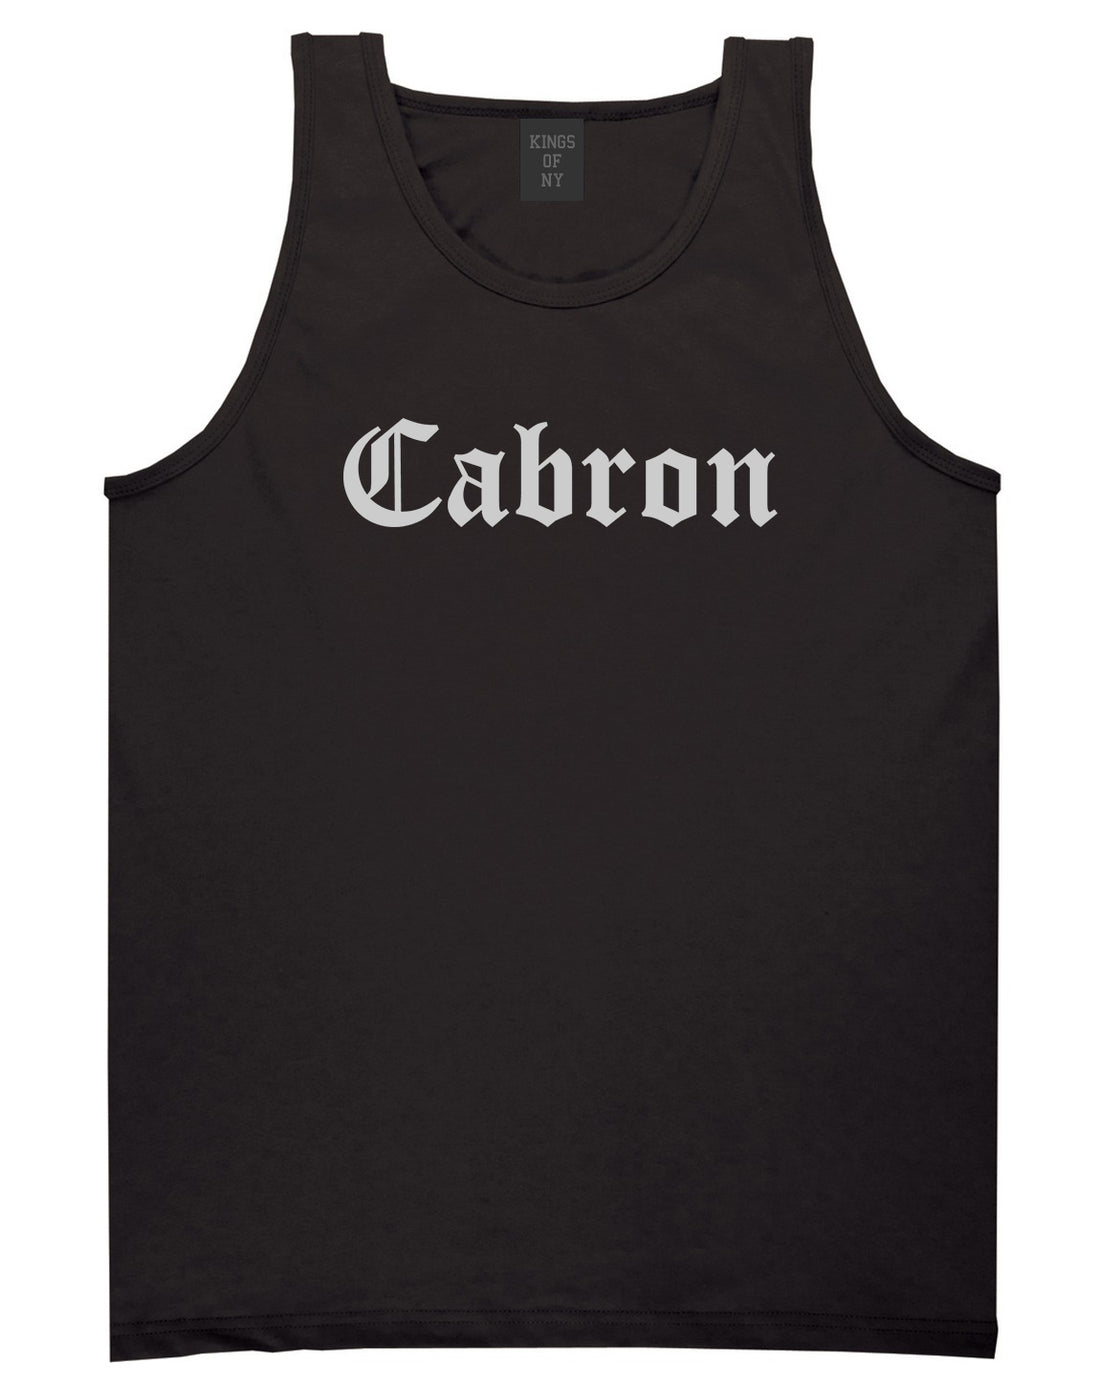 Cabron Spanish Mens Tank Top Shirt Black